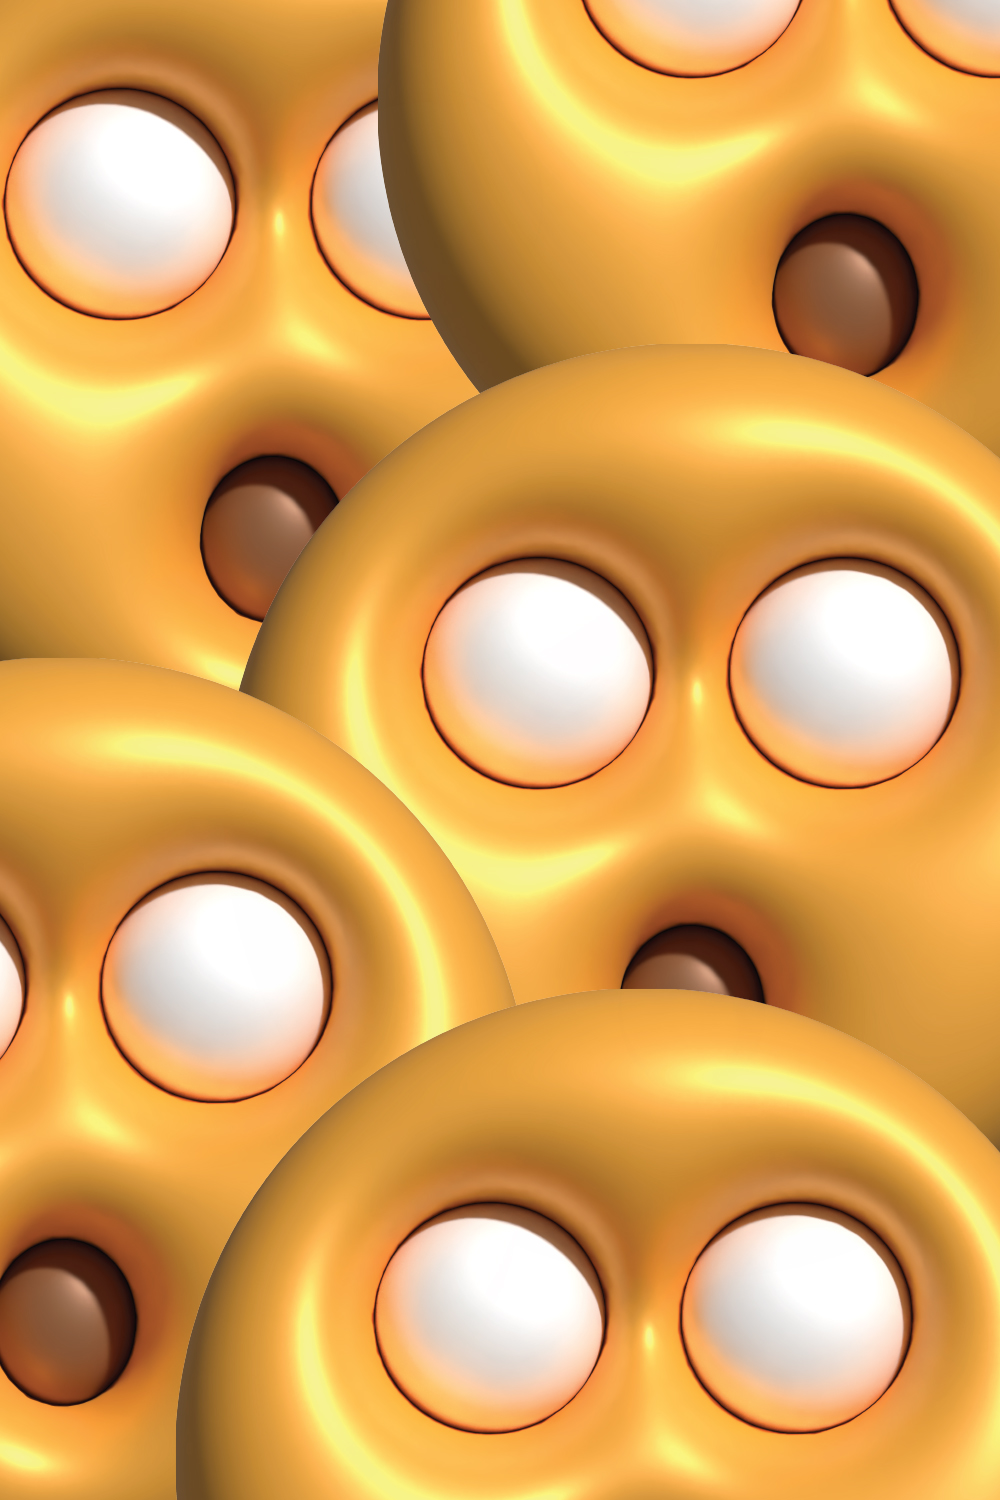 3D Emoticon Freebies pinterest preview image.